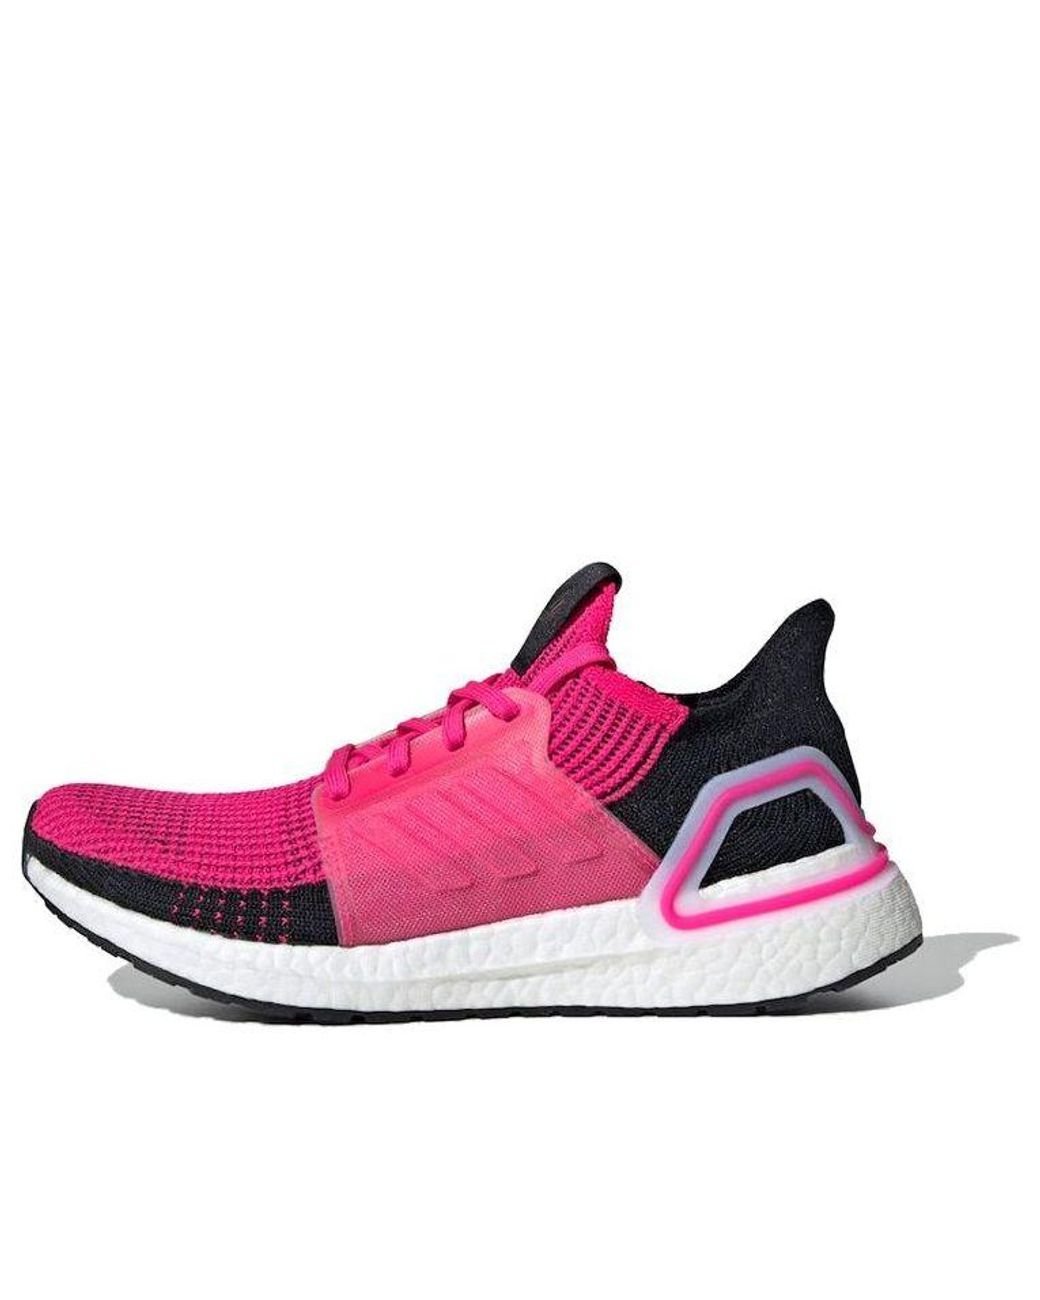 adidas Ultraboost 19 Shock Pink | Lyst